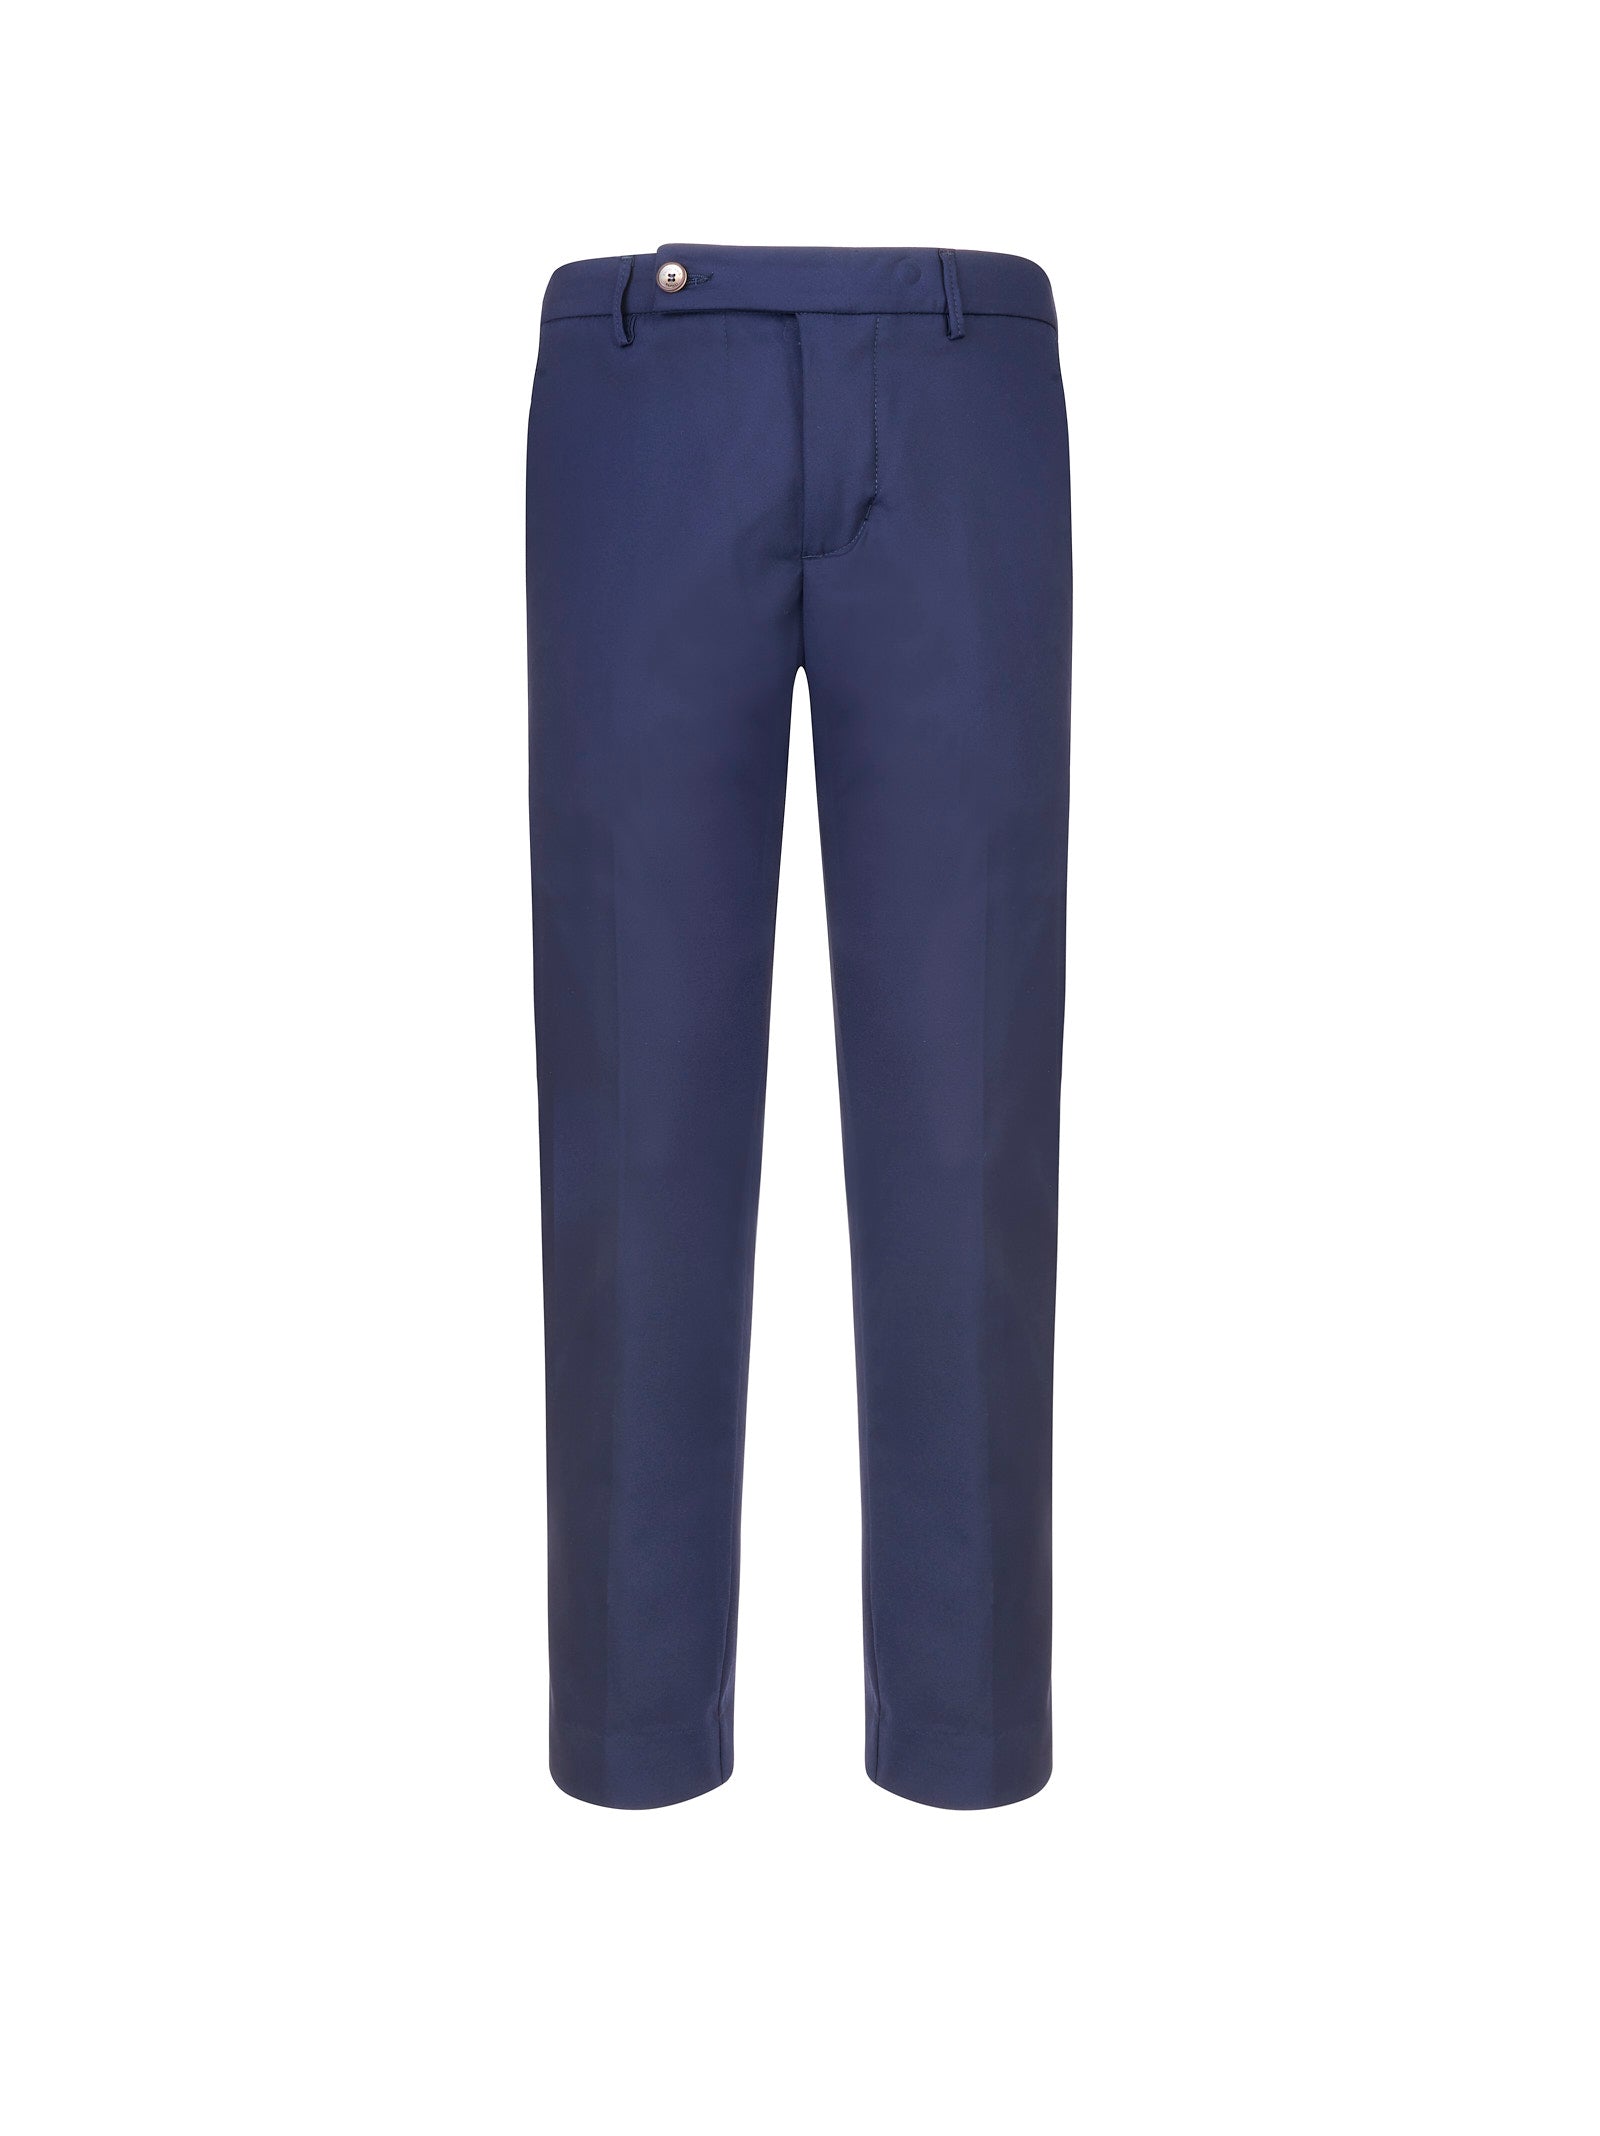 Pantalone ENTRE AMIS Tasca america cinto elastico
Blu